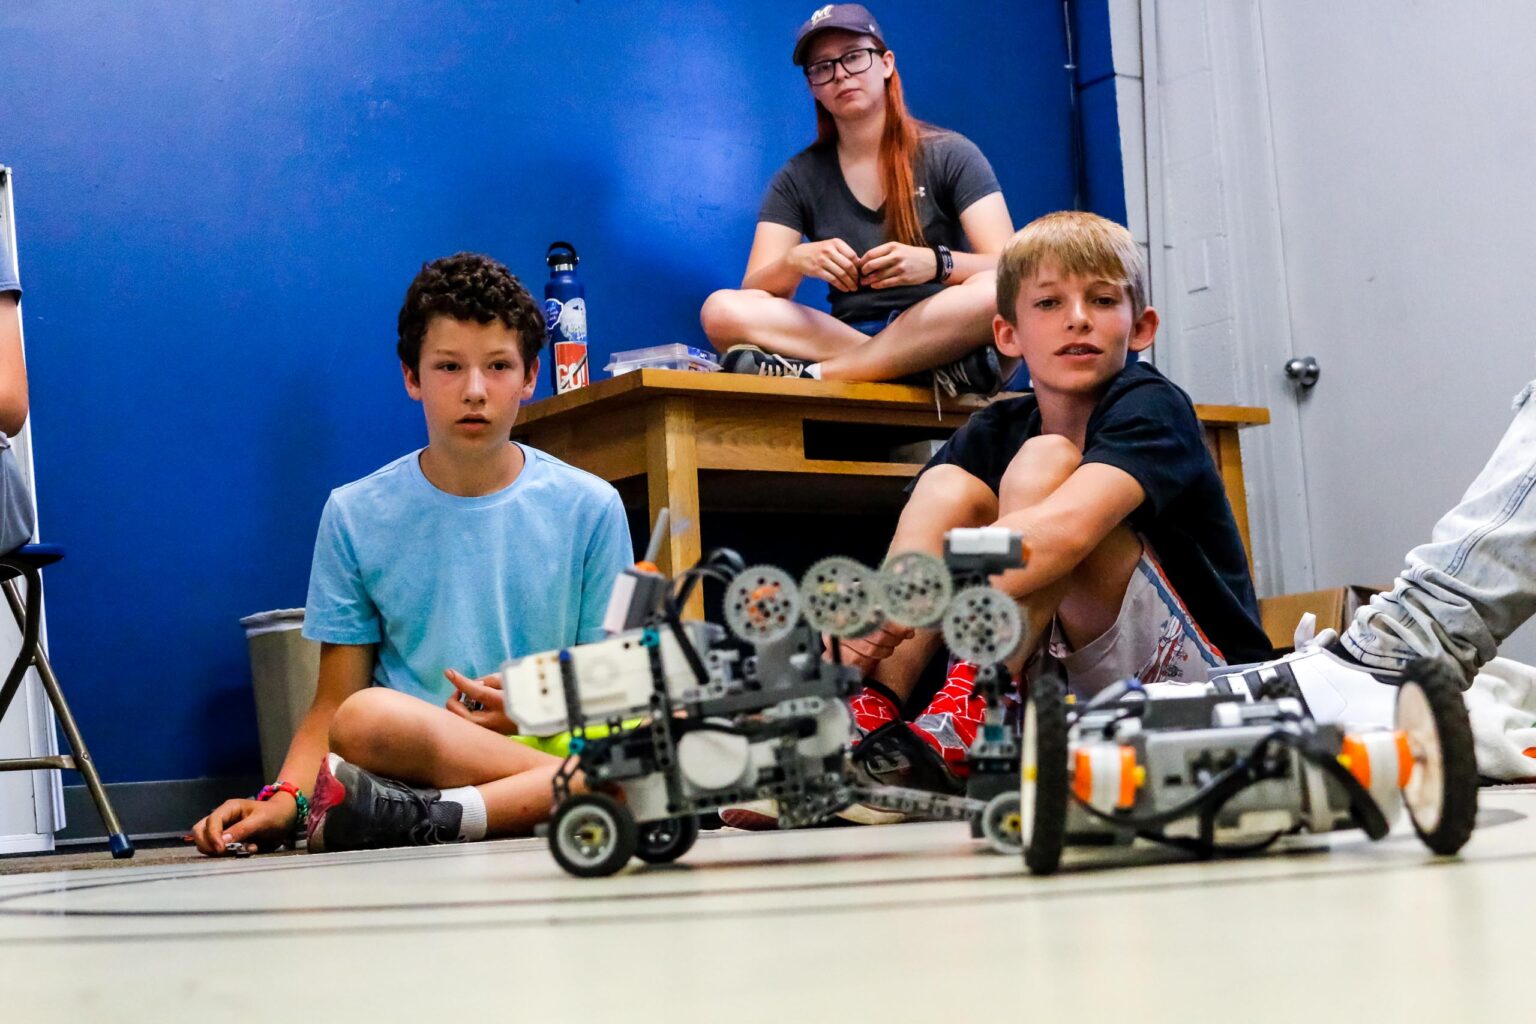 Robotics on the ground with boys.